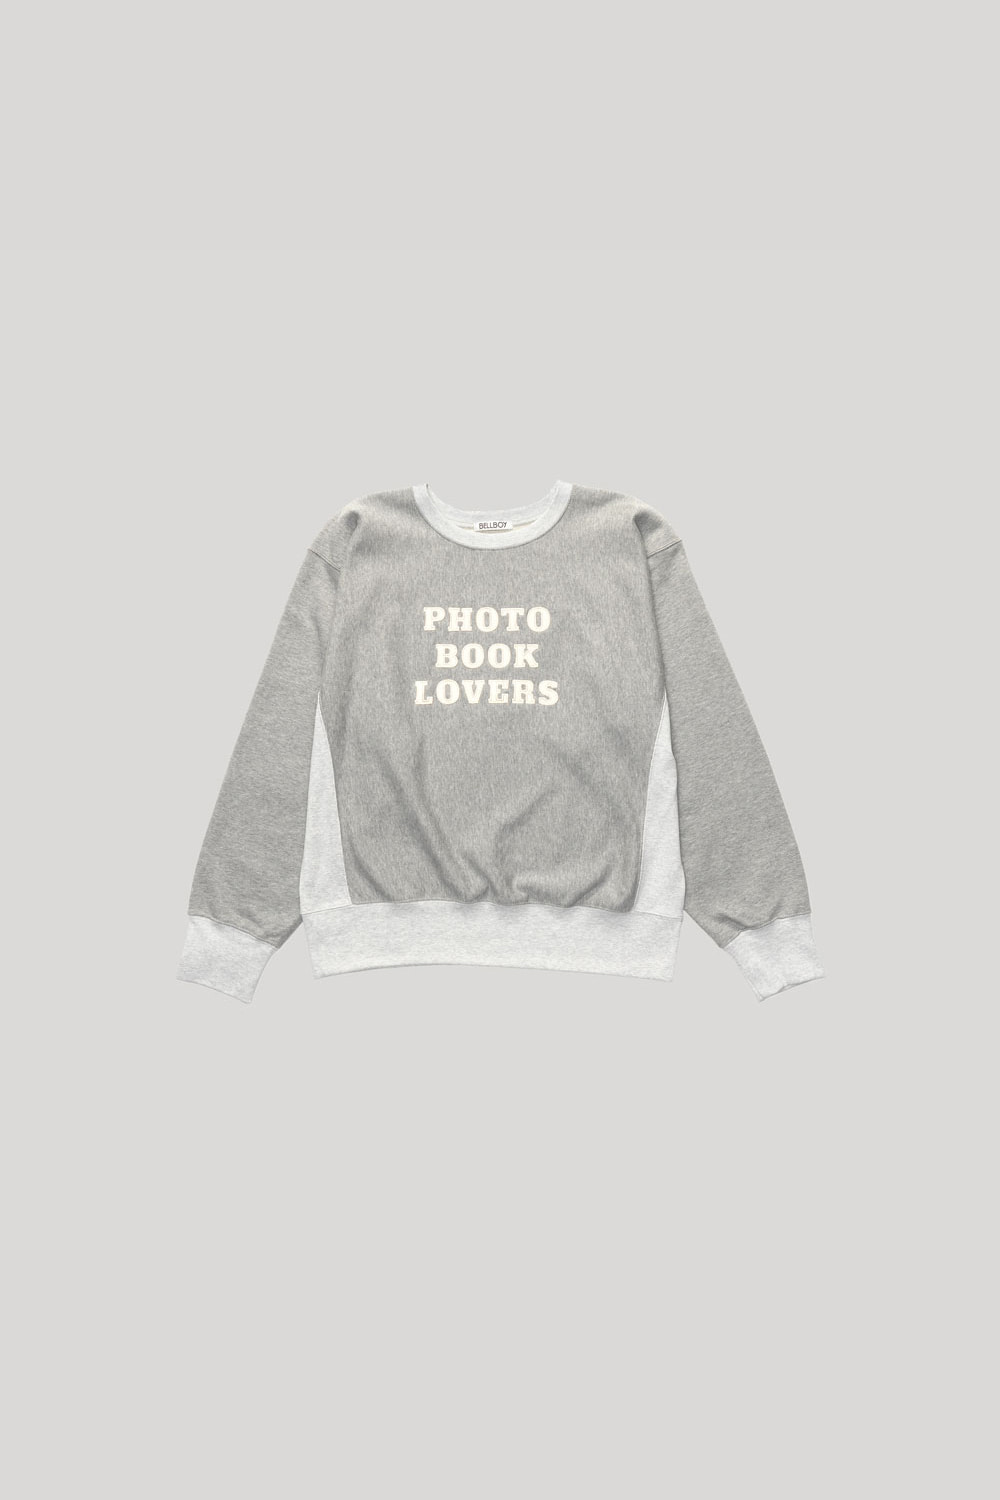 Photobook Lovers Sweatshirts - Boxer 티셔츠, 워시드 헤비웨이트 티셔츠, 옥스포드셔츠, 버튼다운셔츠, 메신저백, 캔버스백